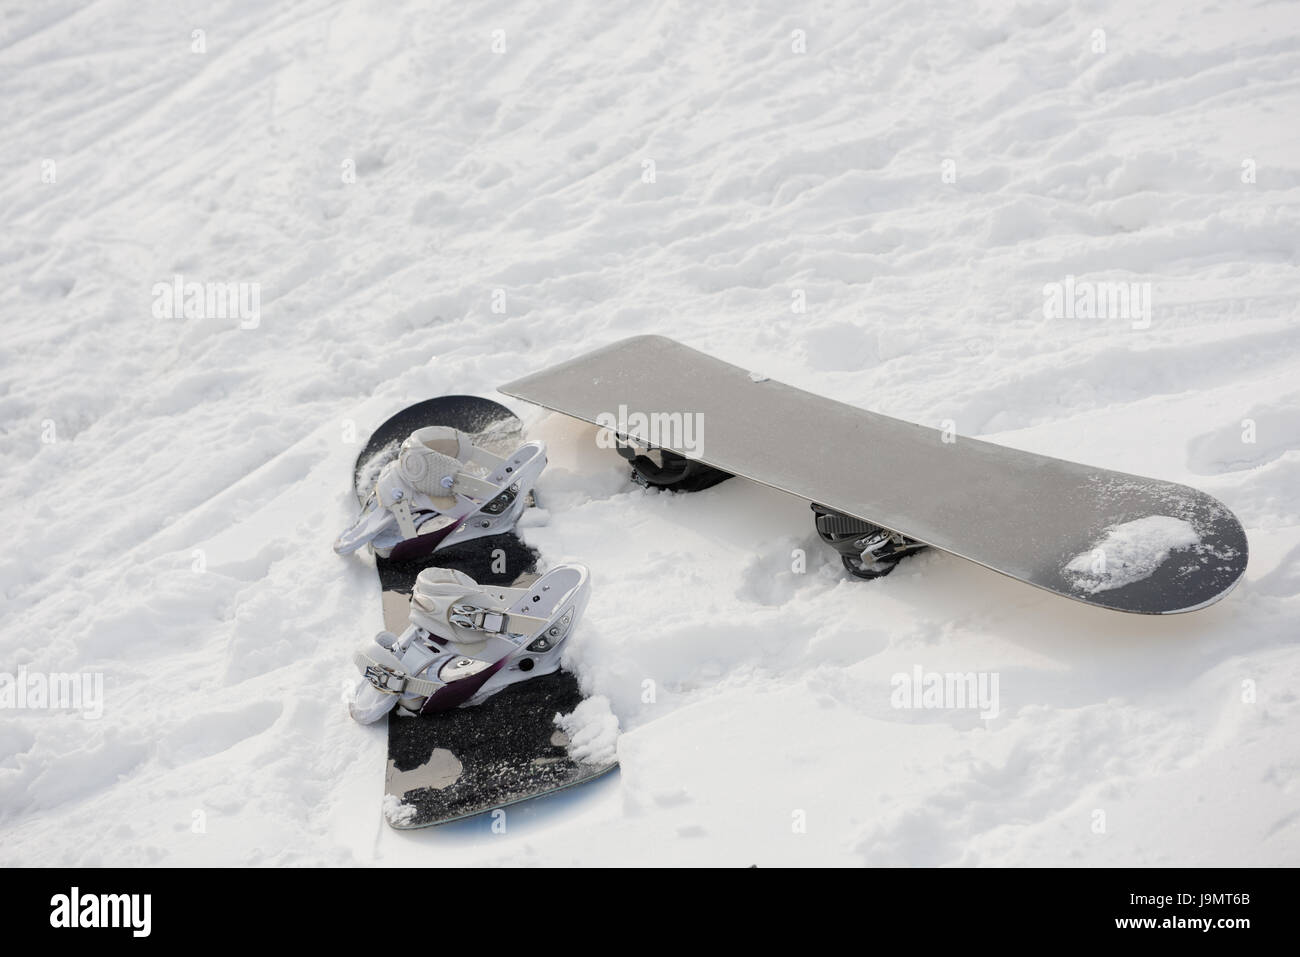 Snowboard on snowy slope in ski resort during winter Stock Photo